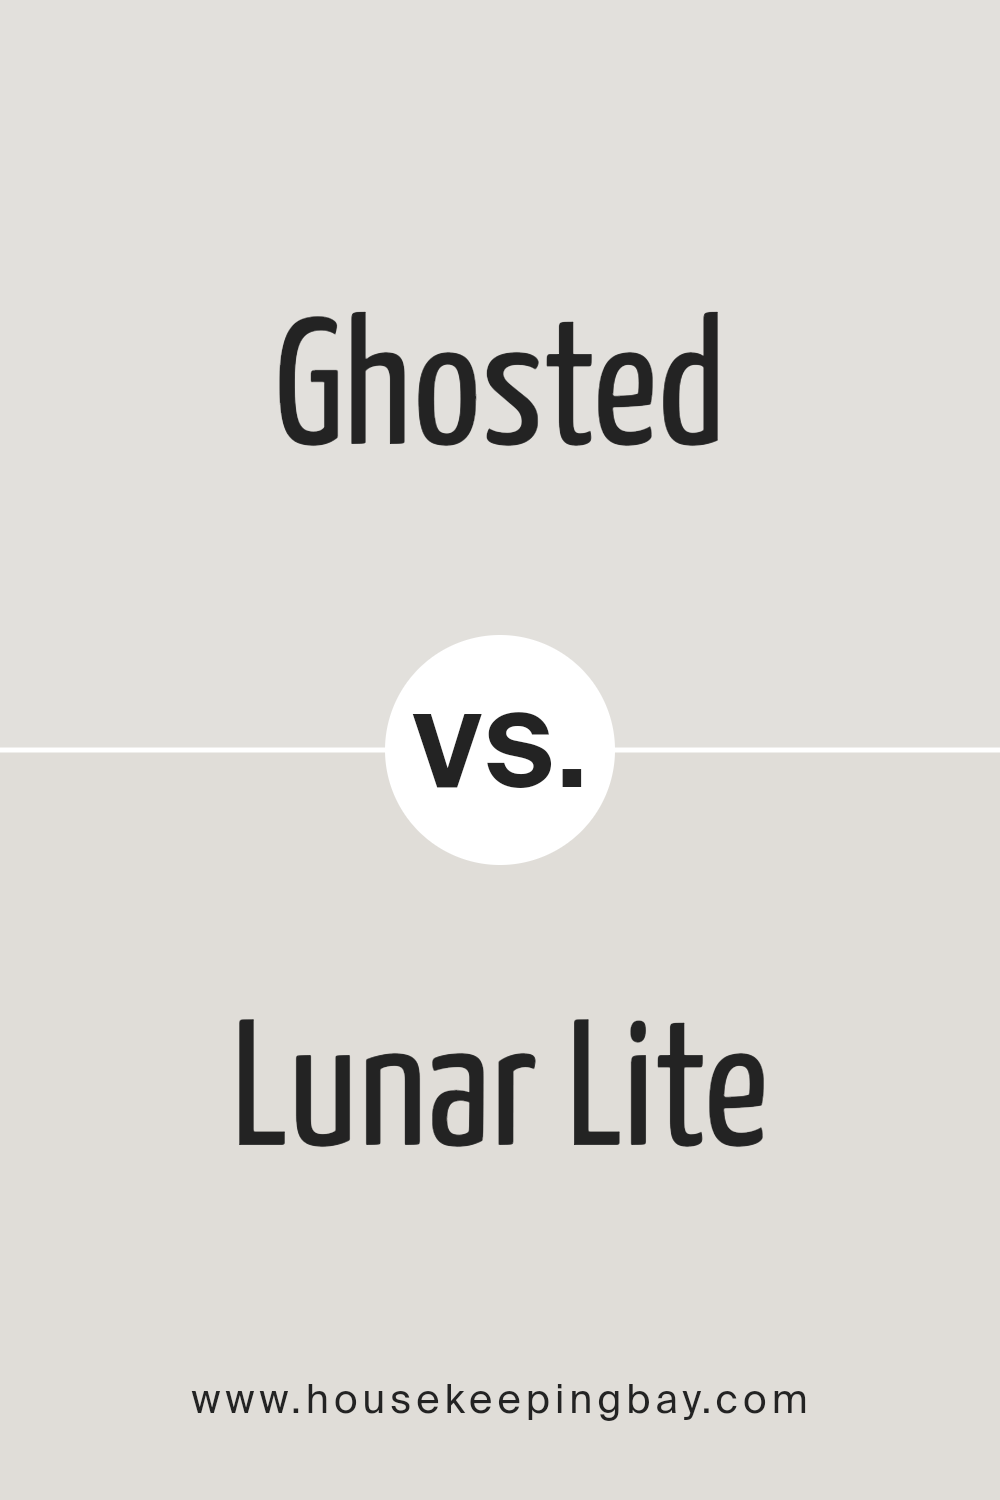 ghosted_sw_9545_vs_lunar_lite_sw_9546